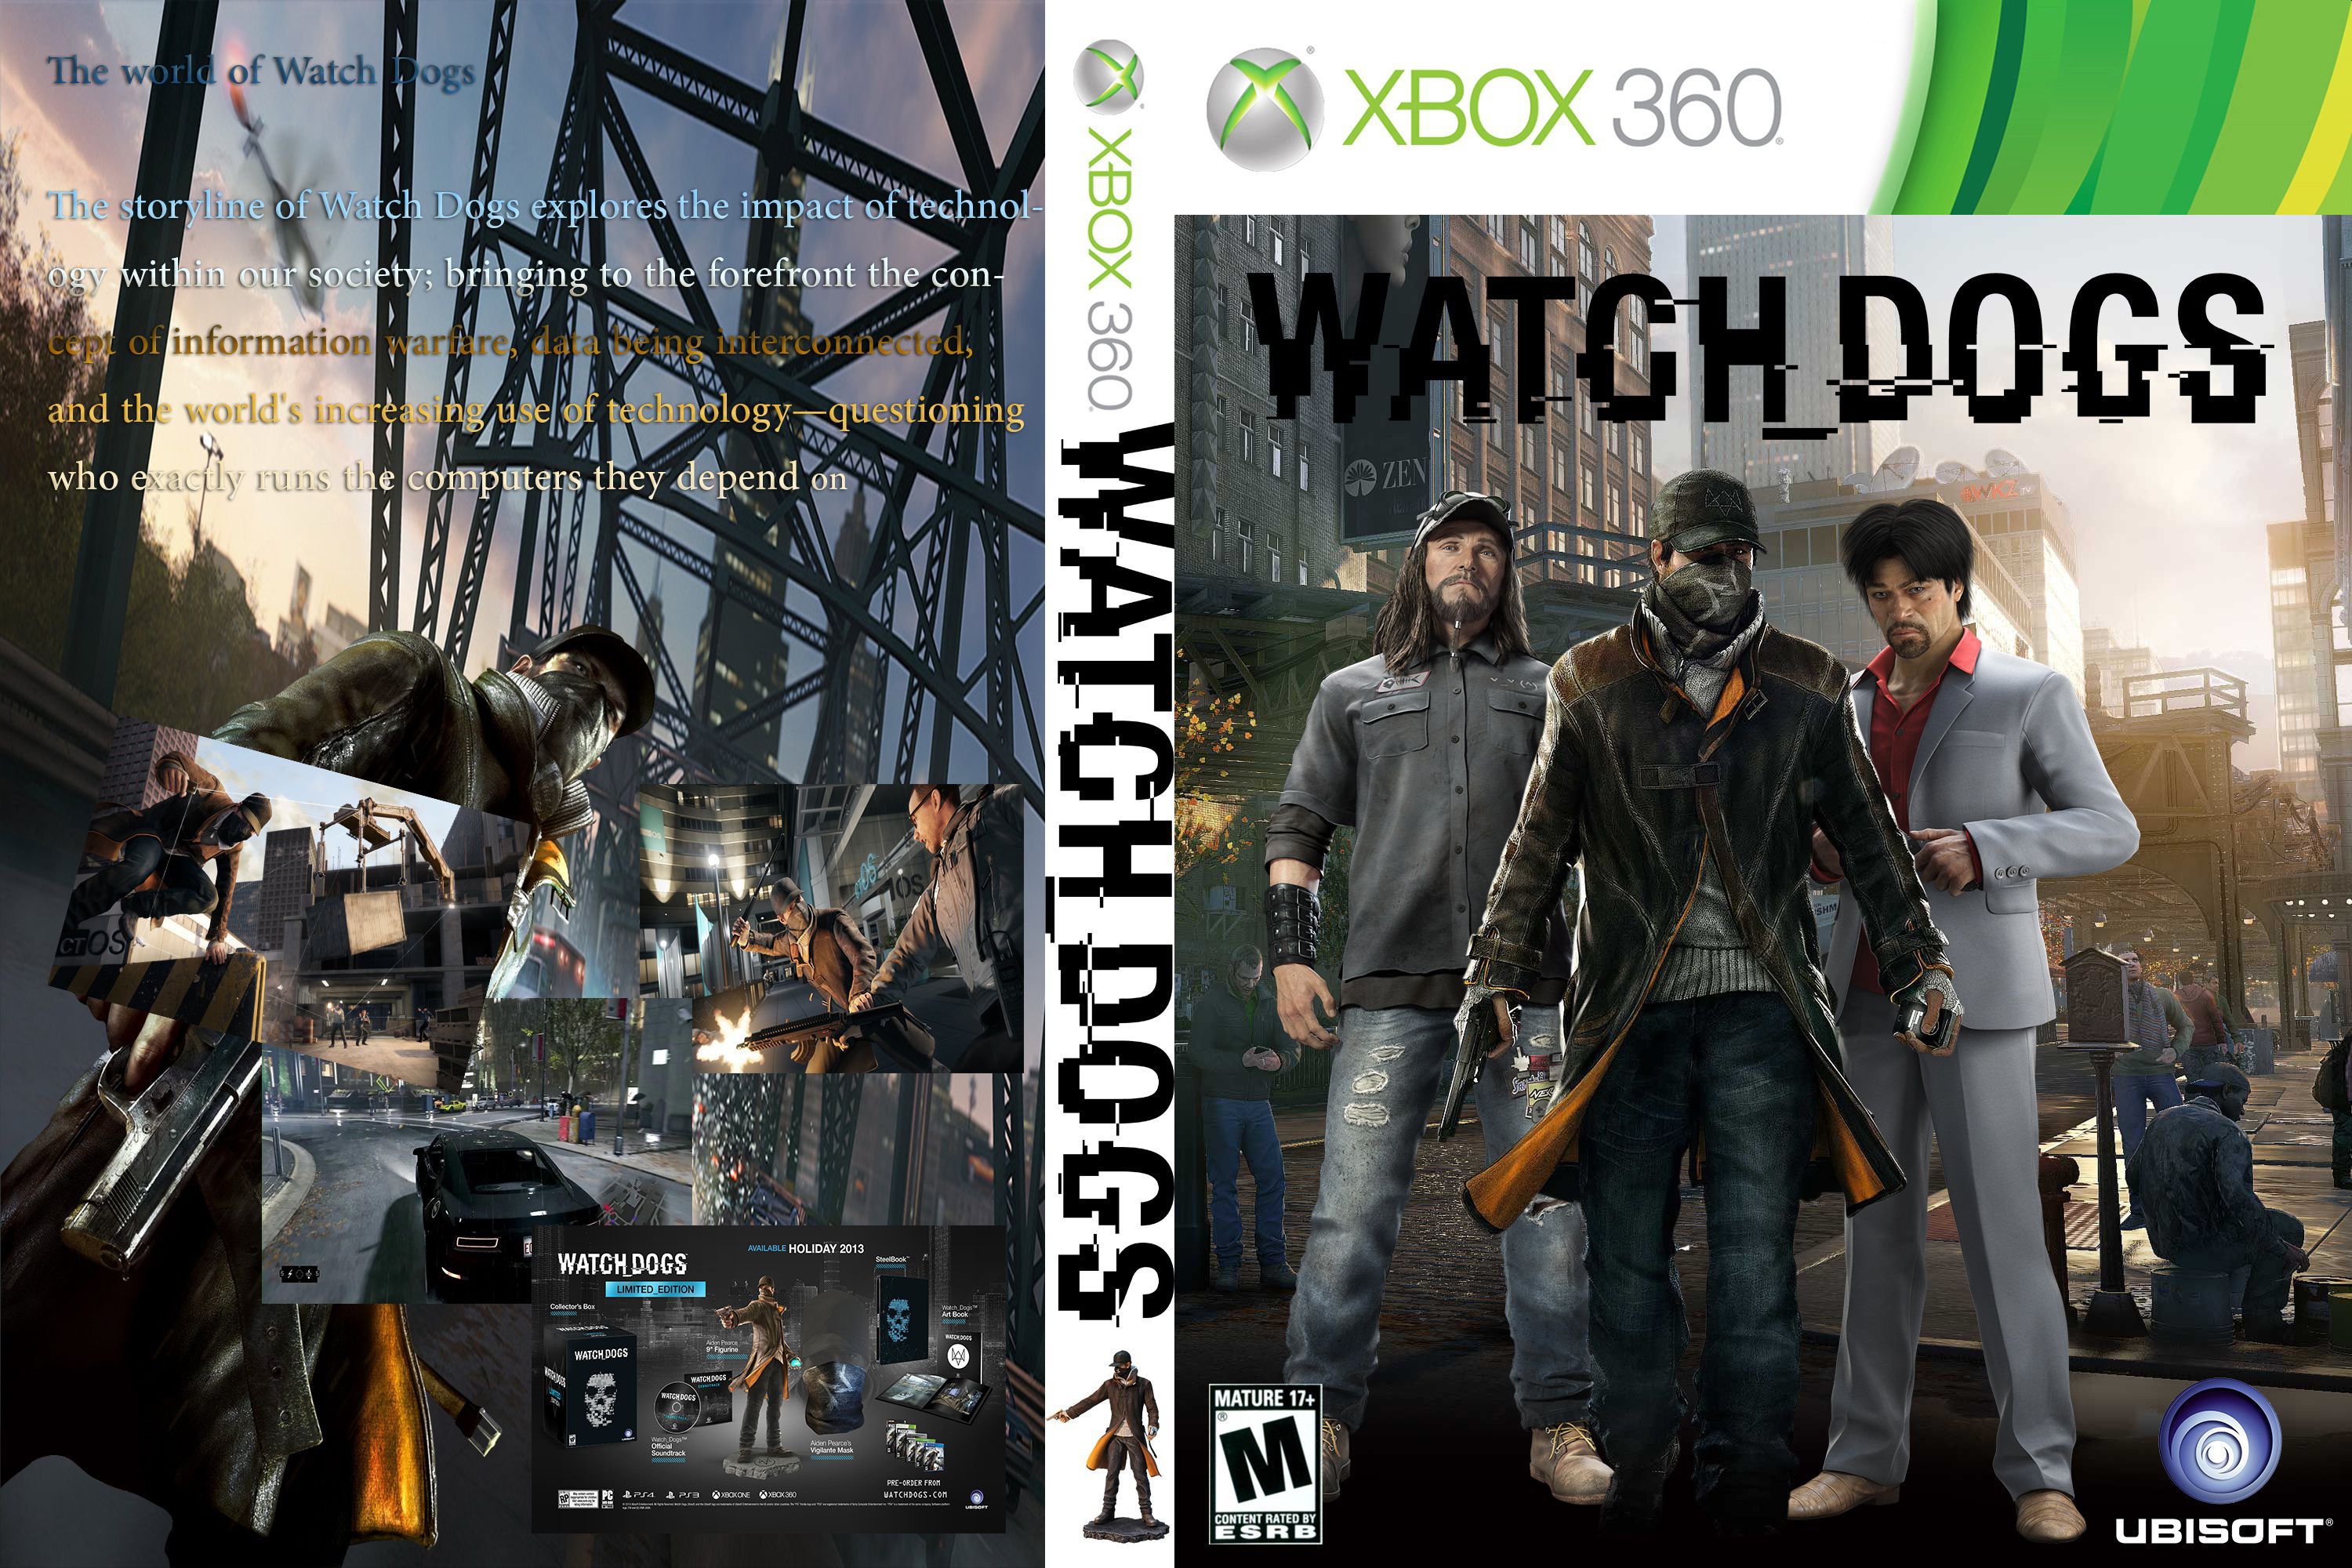 Топ игр series x. Watch Dogs Xbox 360. Вотч догс на Xbox 360. Watch Dogs хбокс 360. Вотч догс 1 Xbox 360.